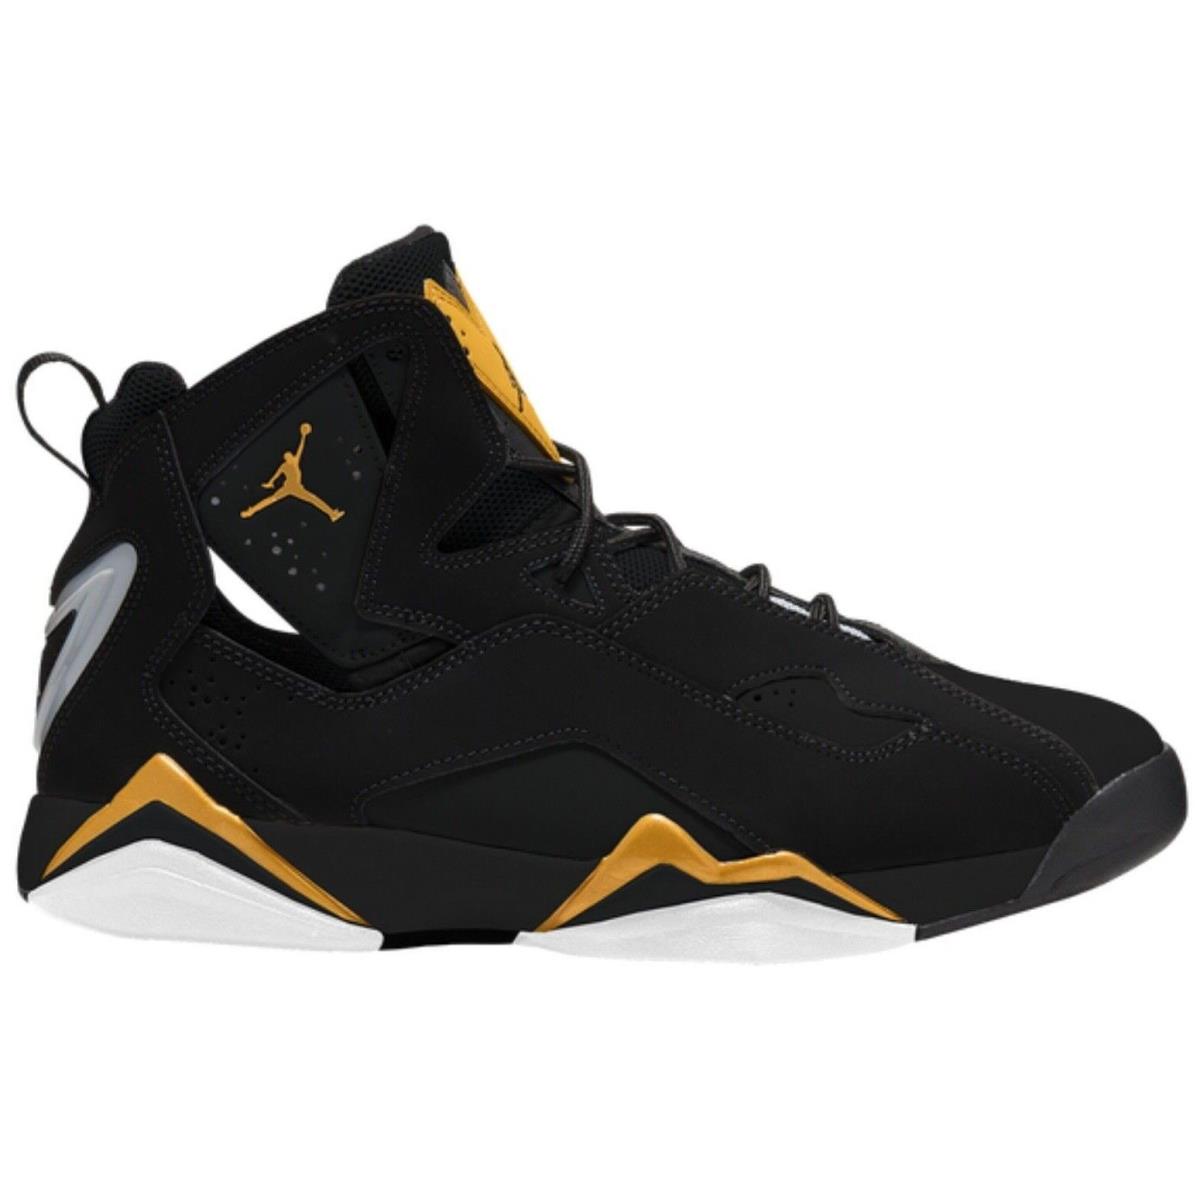 Nike Jordan True Flight Men`s Basketball Shoes All Colors US Sizes 7-14 Black / Metallic Gold / Wolf Grey / White